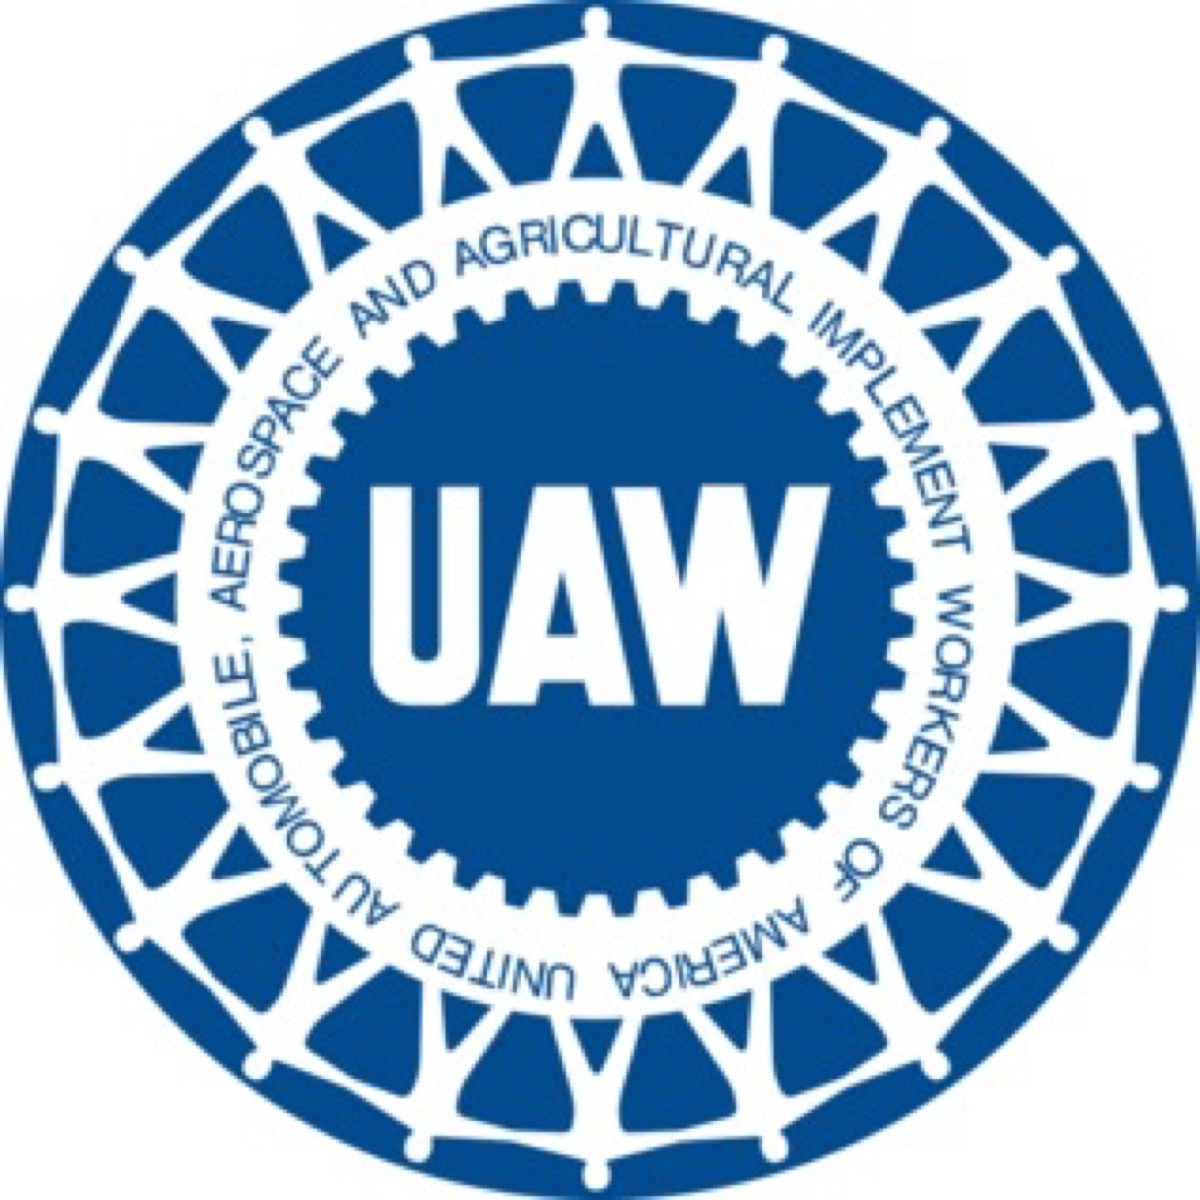 UAW Logo